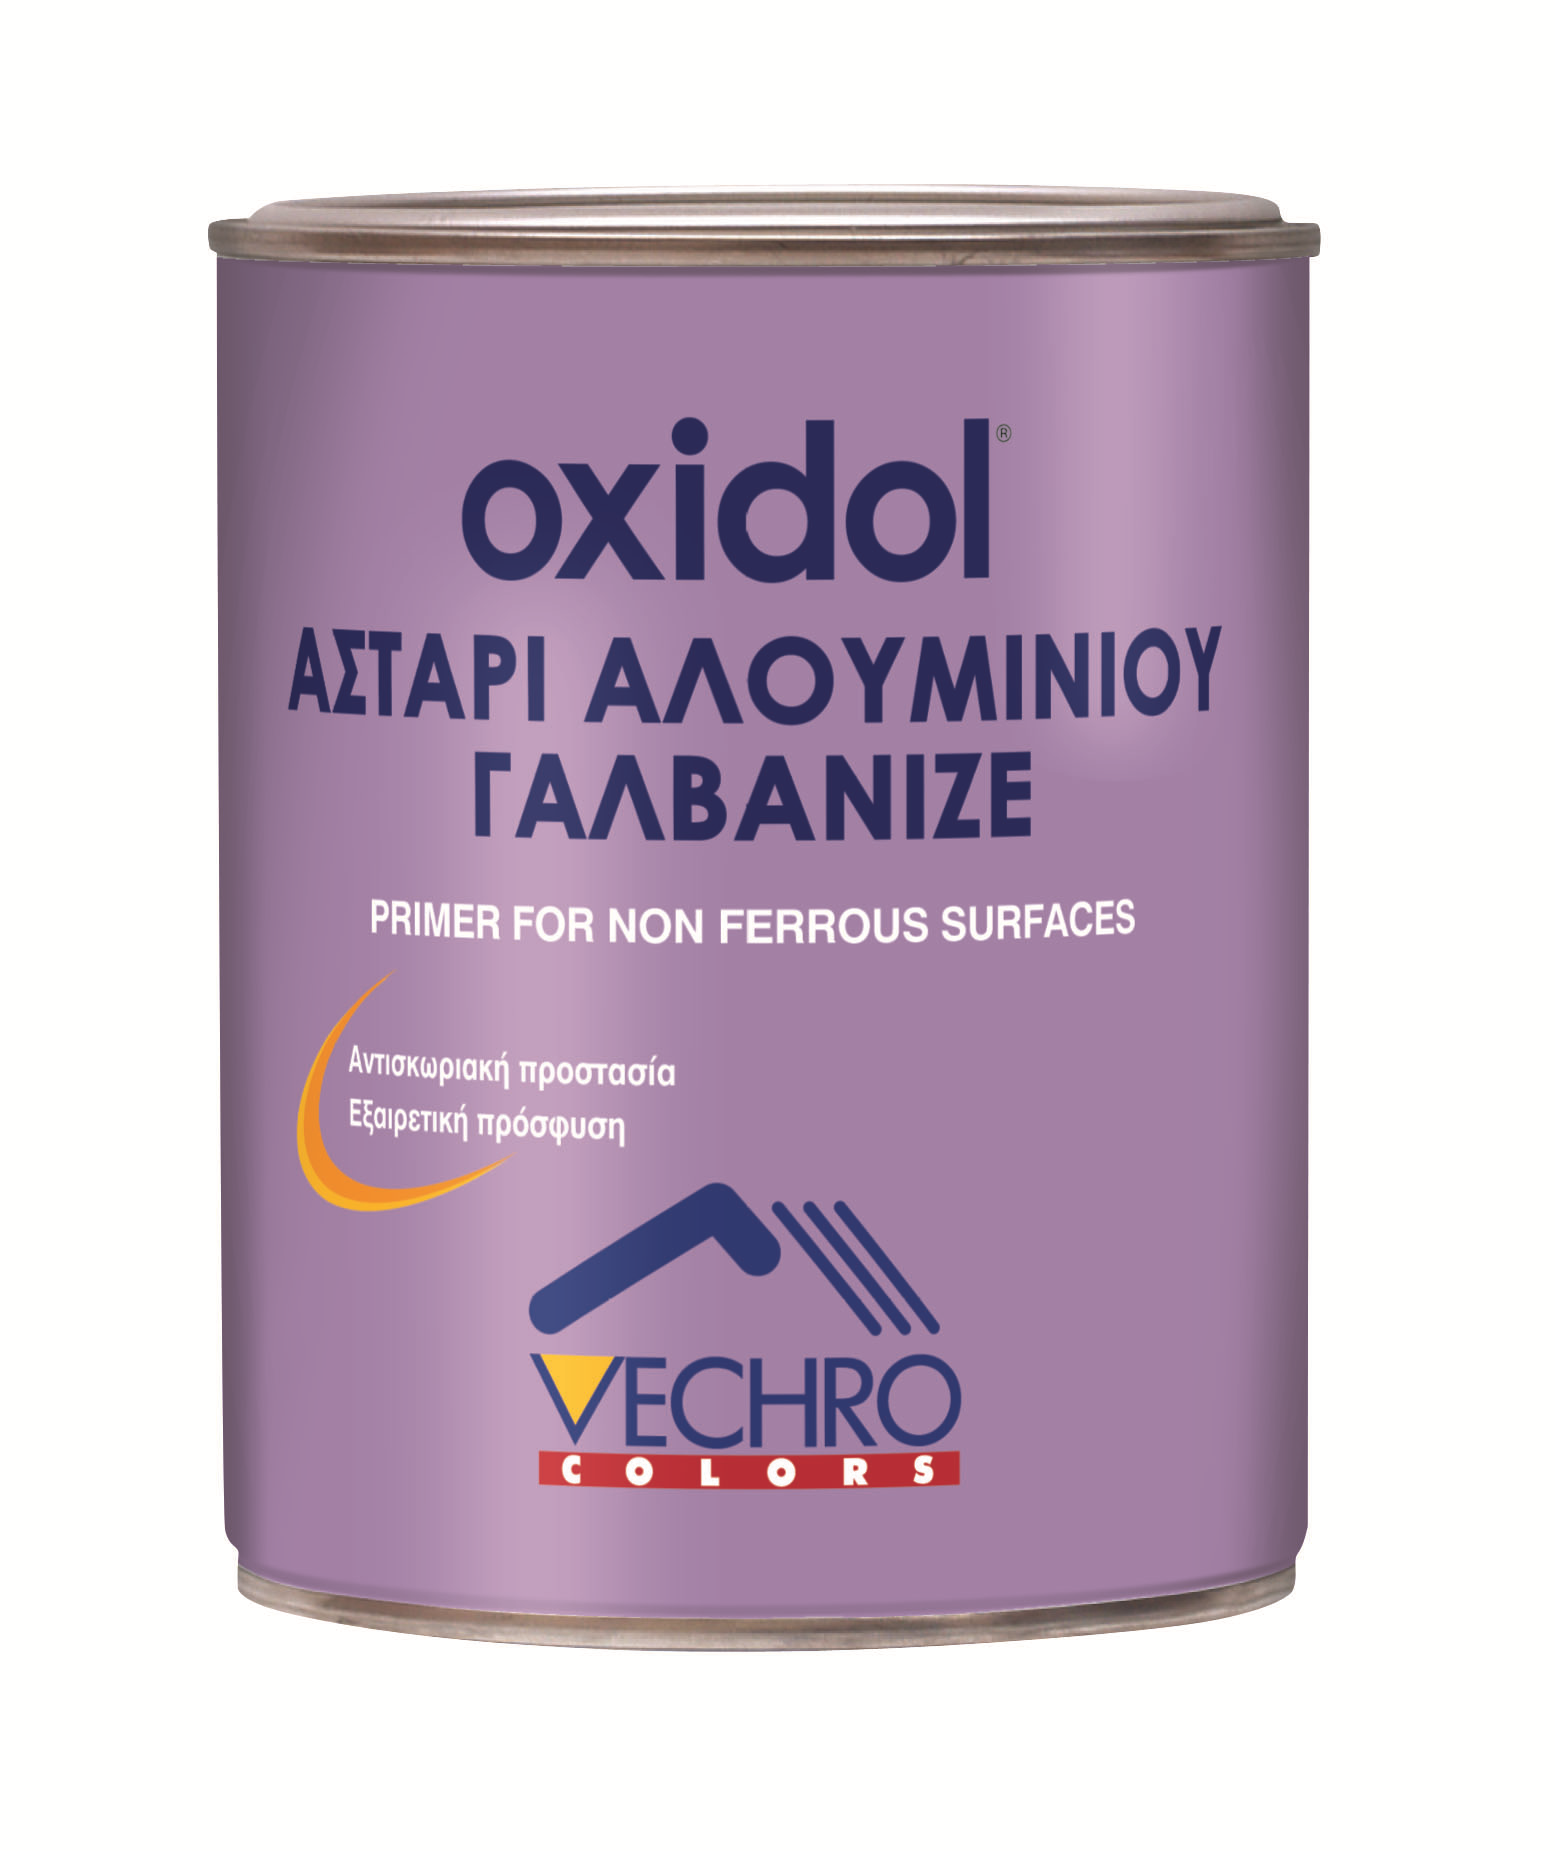 Dimopanas - VECHRO OXIDOL ΑΛΟΥΜΙΝΙΟΥ ΓΑΛΒΑΝΙΖΕ